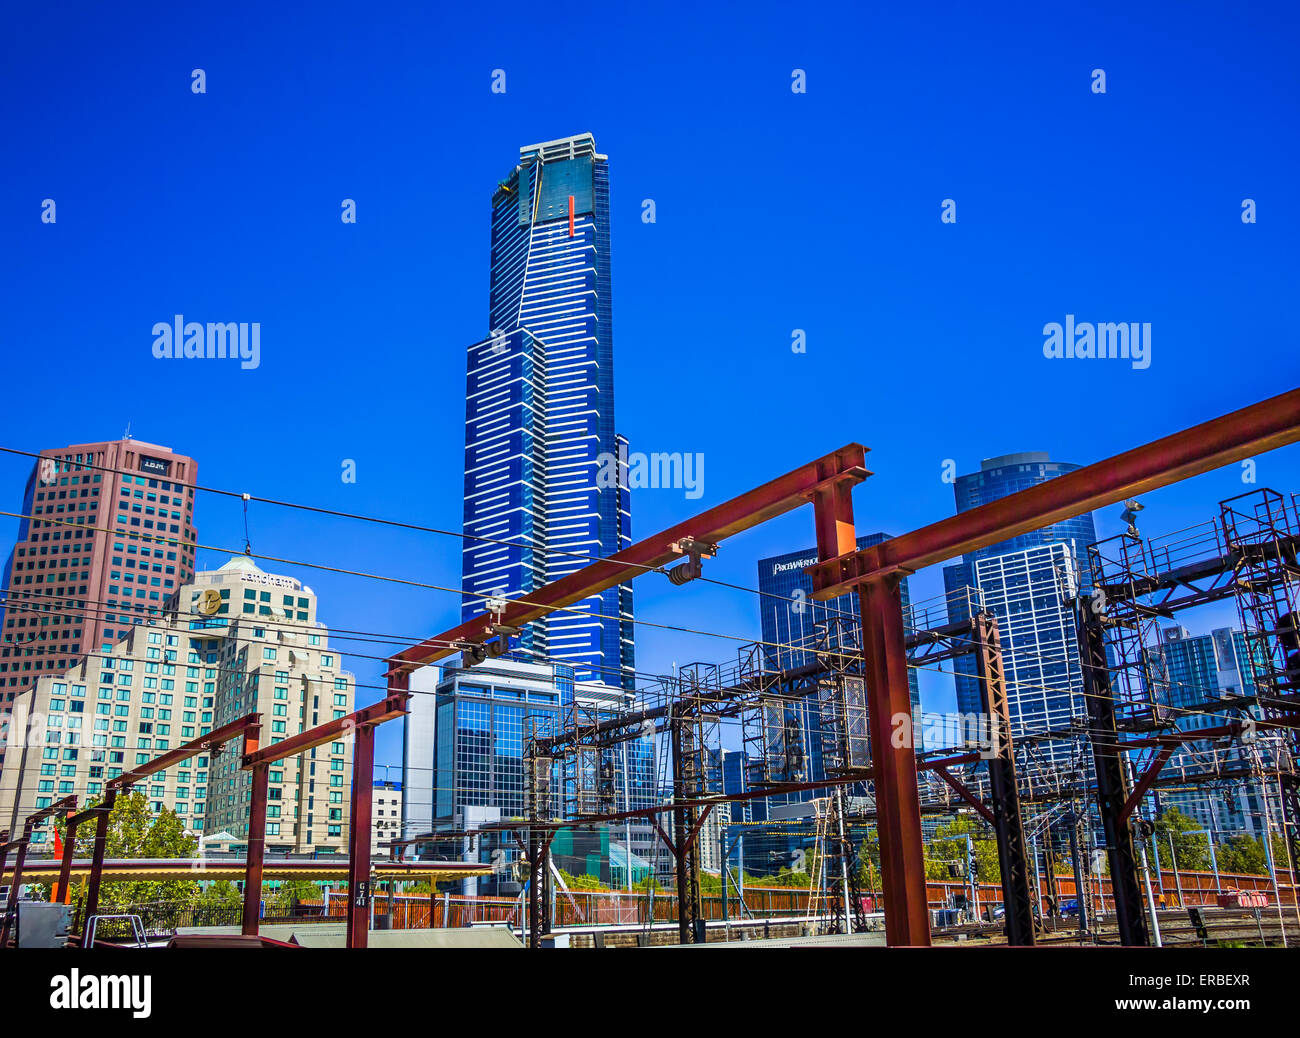 Flinders Street railway line and steel gantry against background of modern city skyscrapers, Melbourne Australia Stock Photo